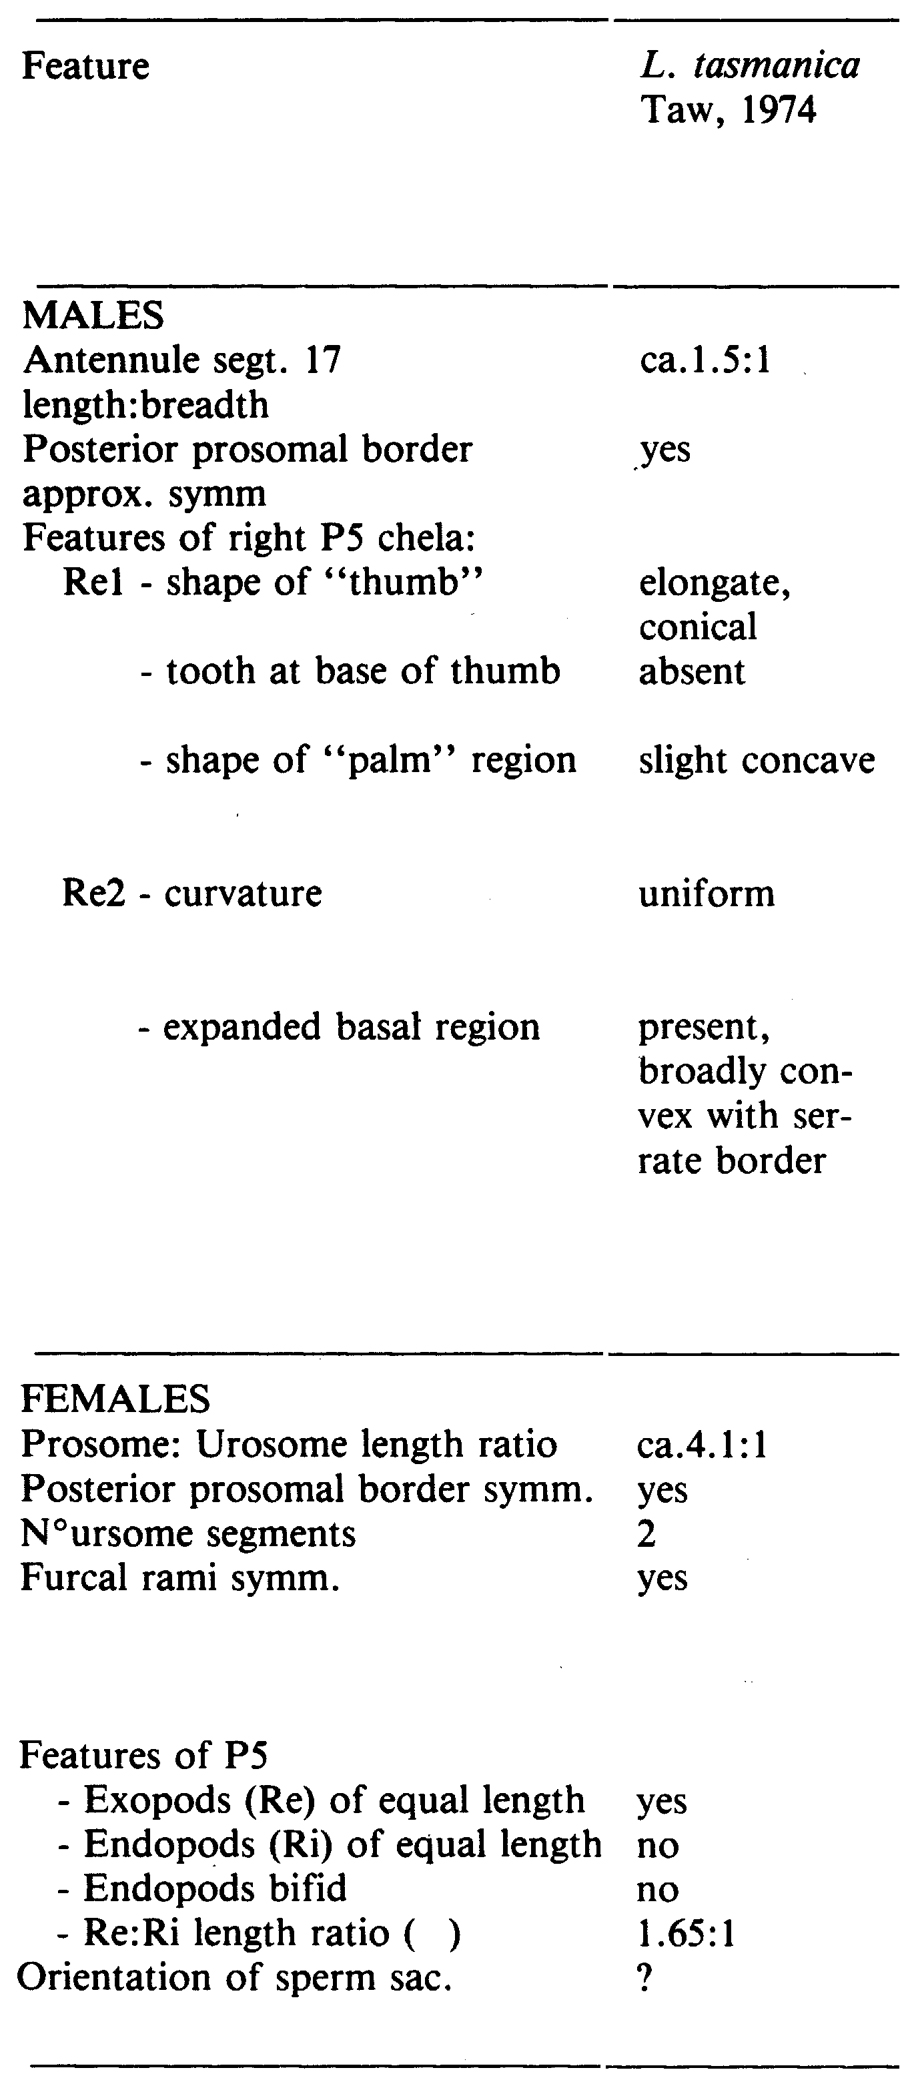 Espce Labidocera tasmanica - Planche 4 de figures morphologiques